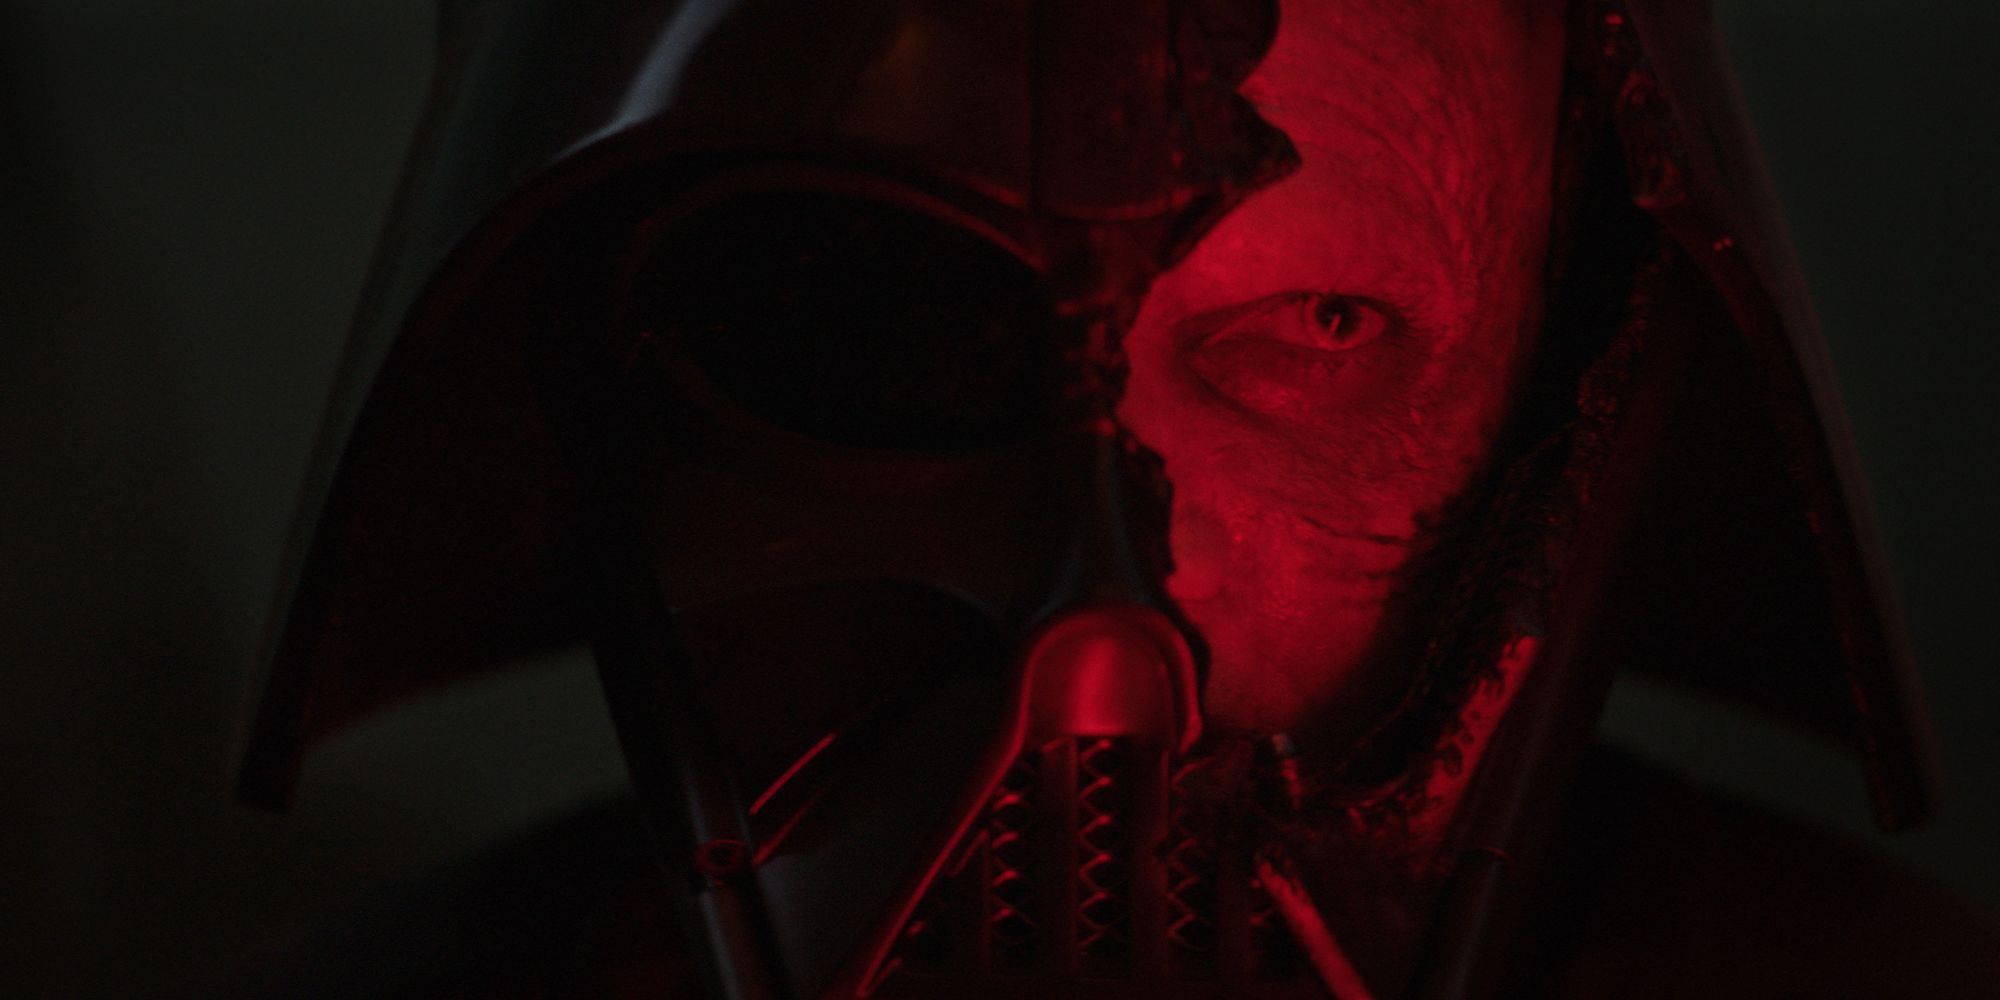 Darth Vader's Face Revealed